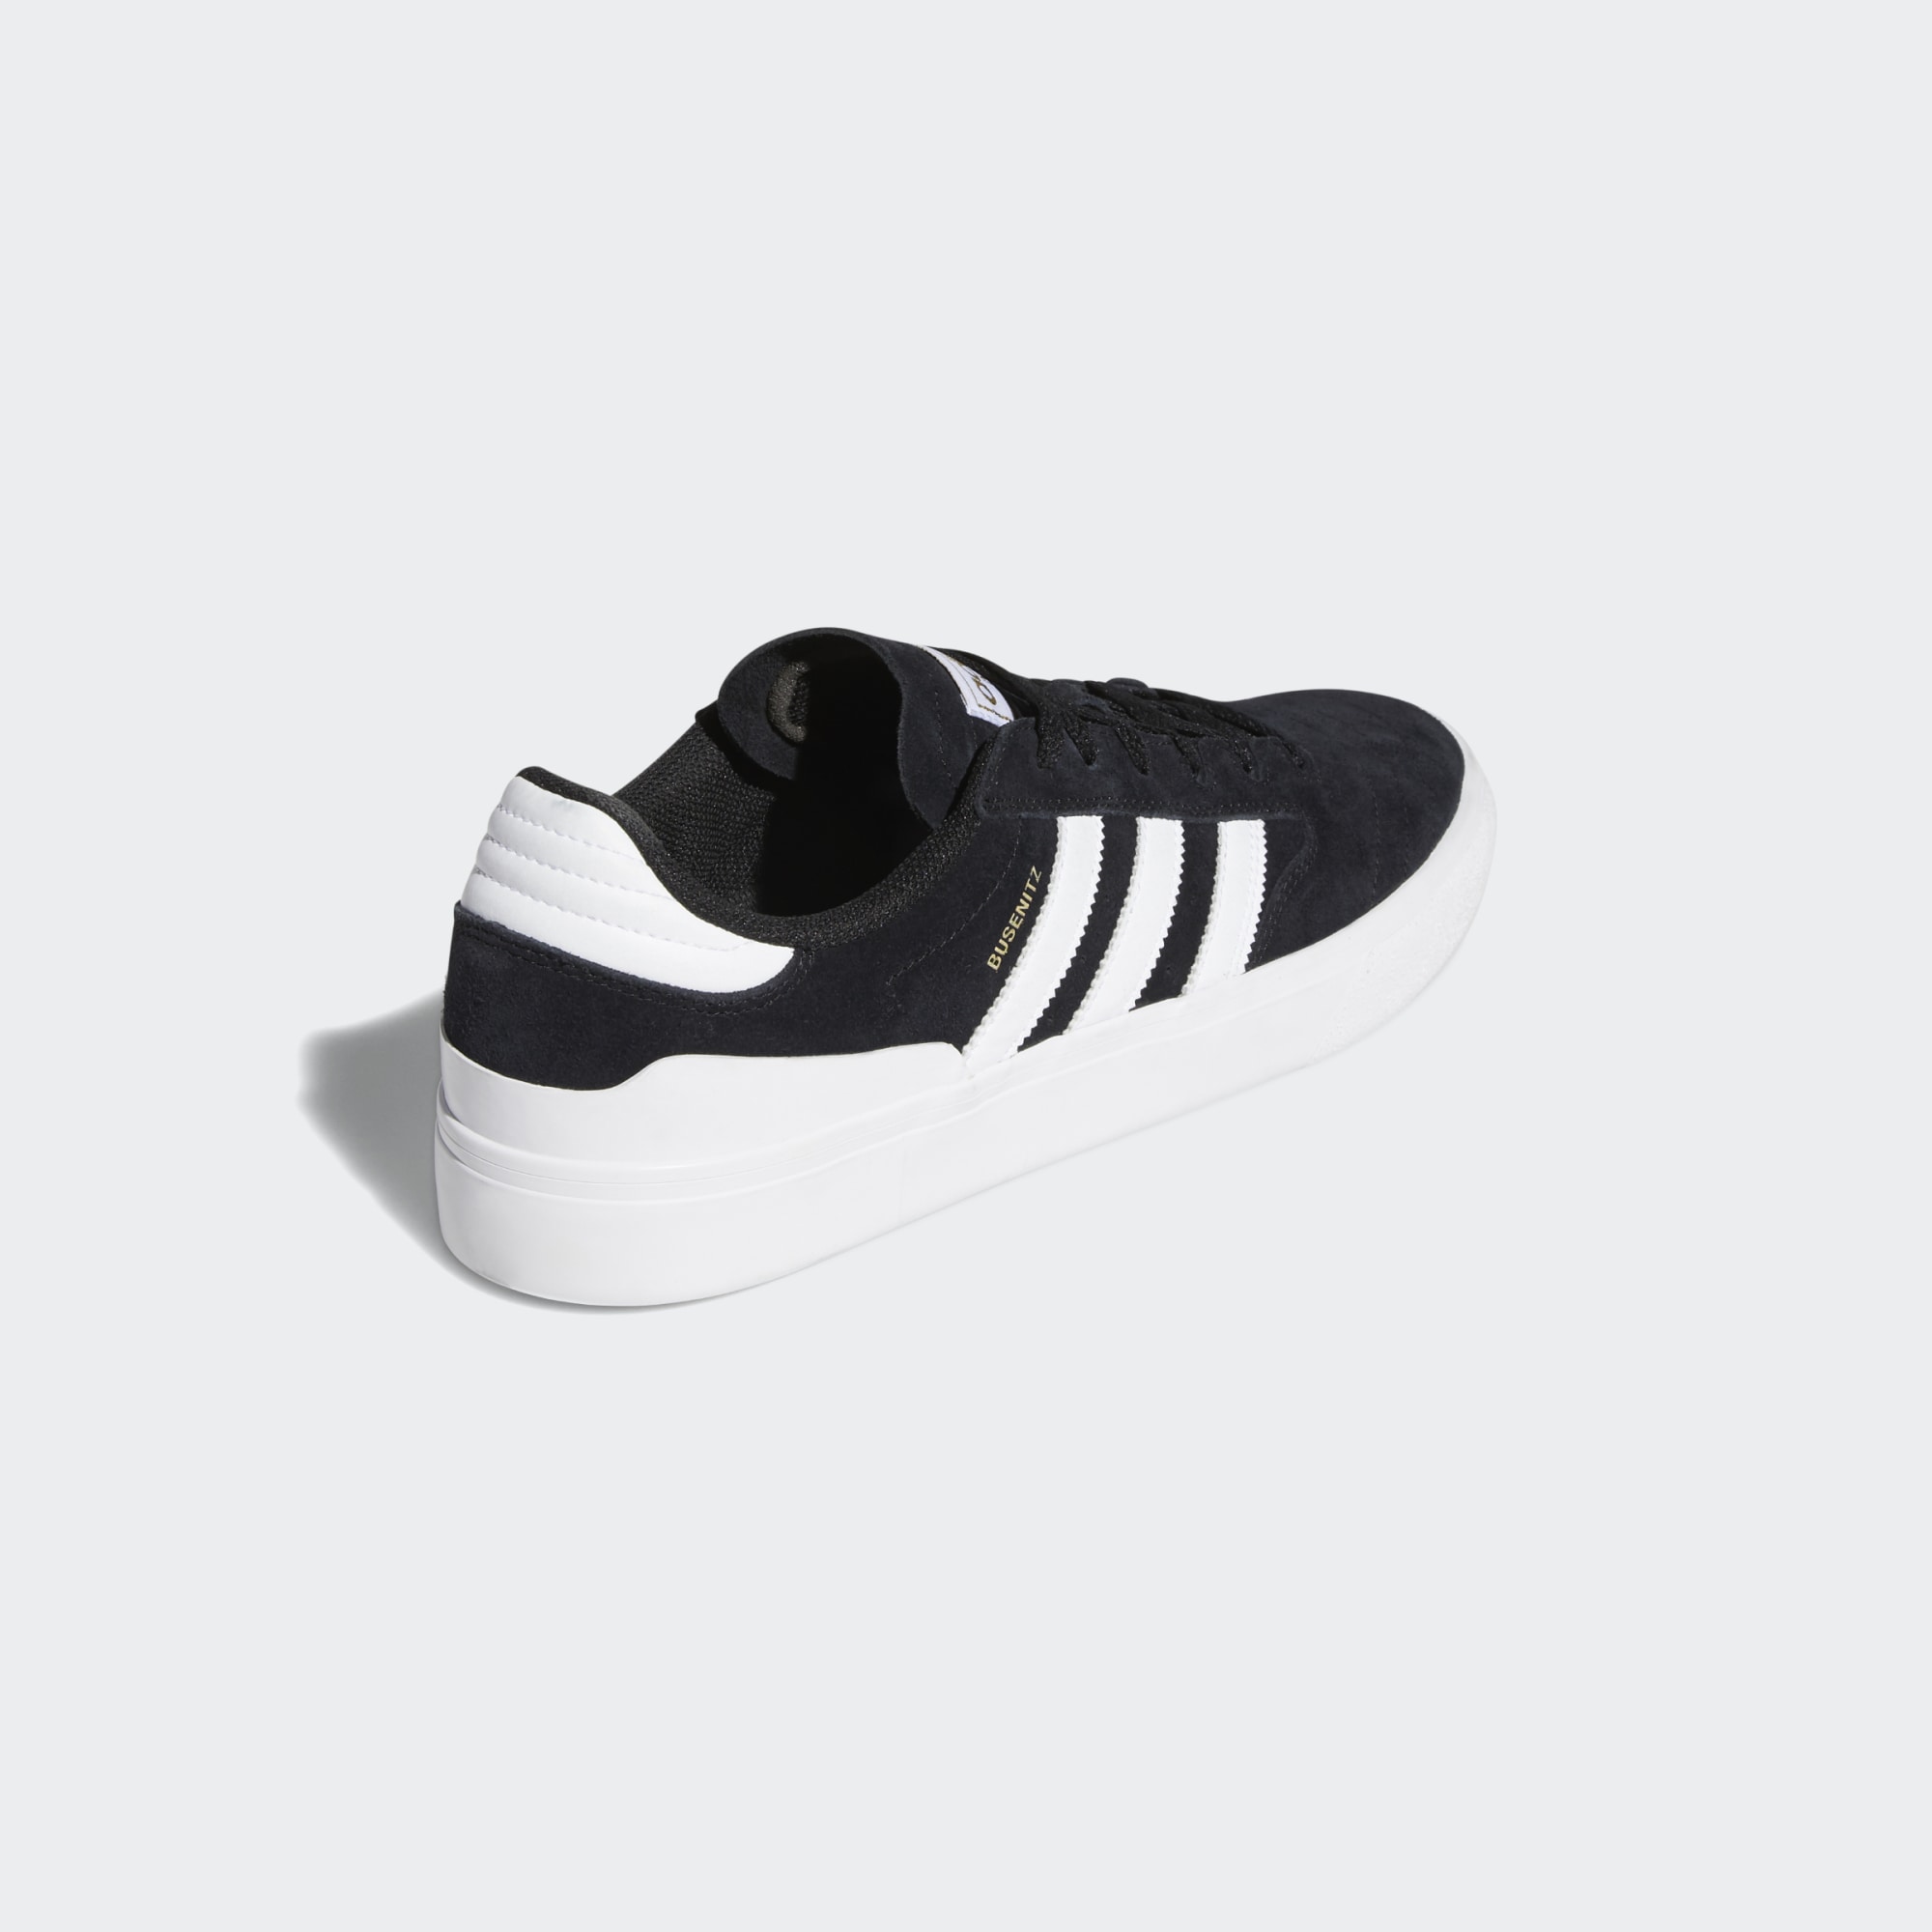 Adidas Busenitz Vulc II schoenen core black / cloud white / gum